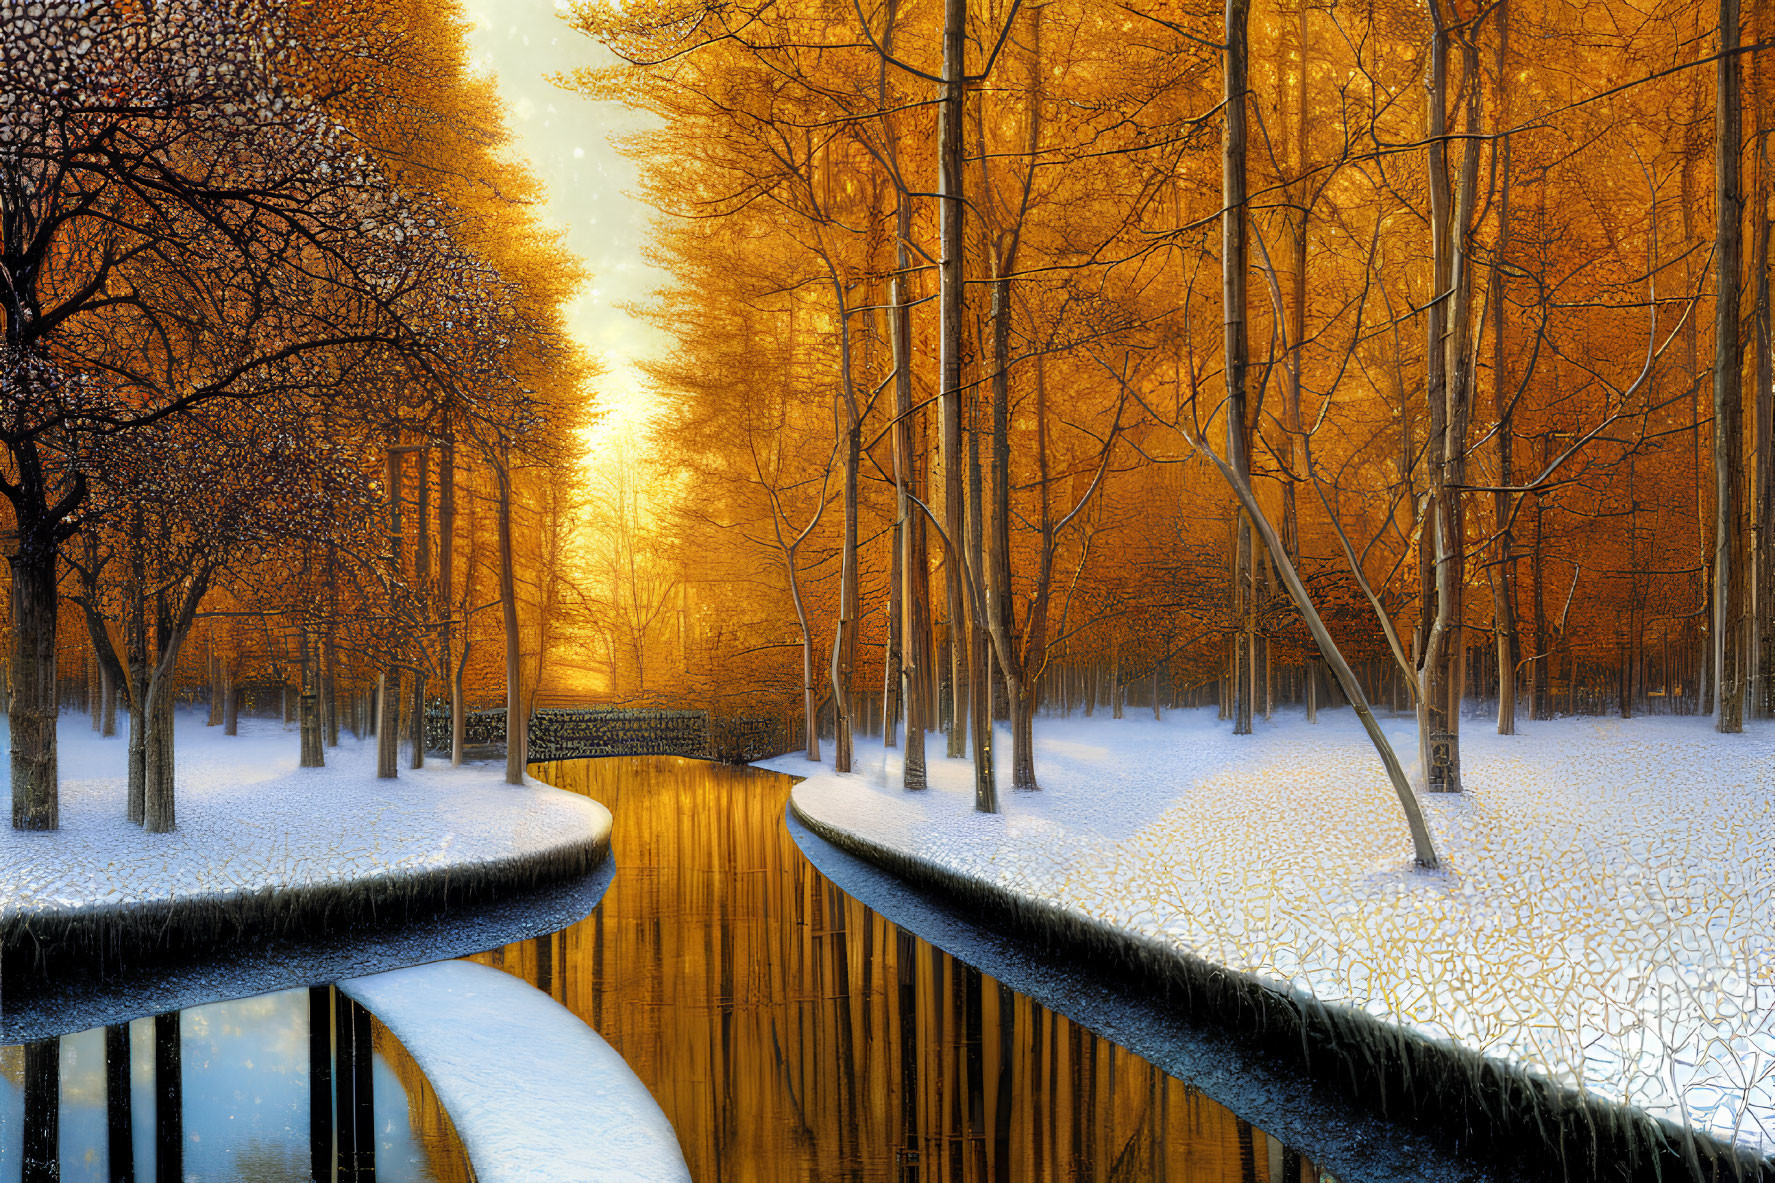 Snow-covered pathway, bridge over stream, golden trees in winter sunlight